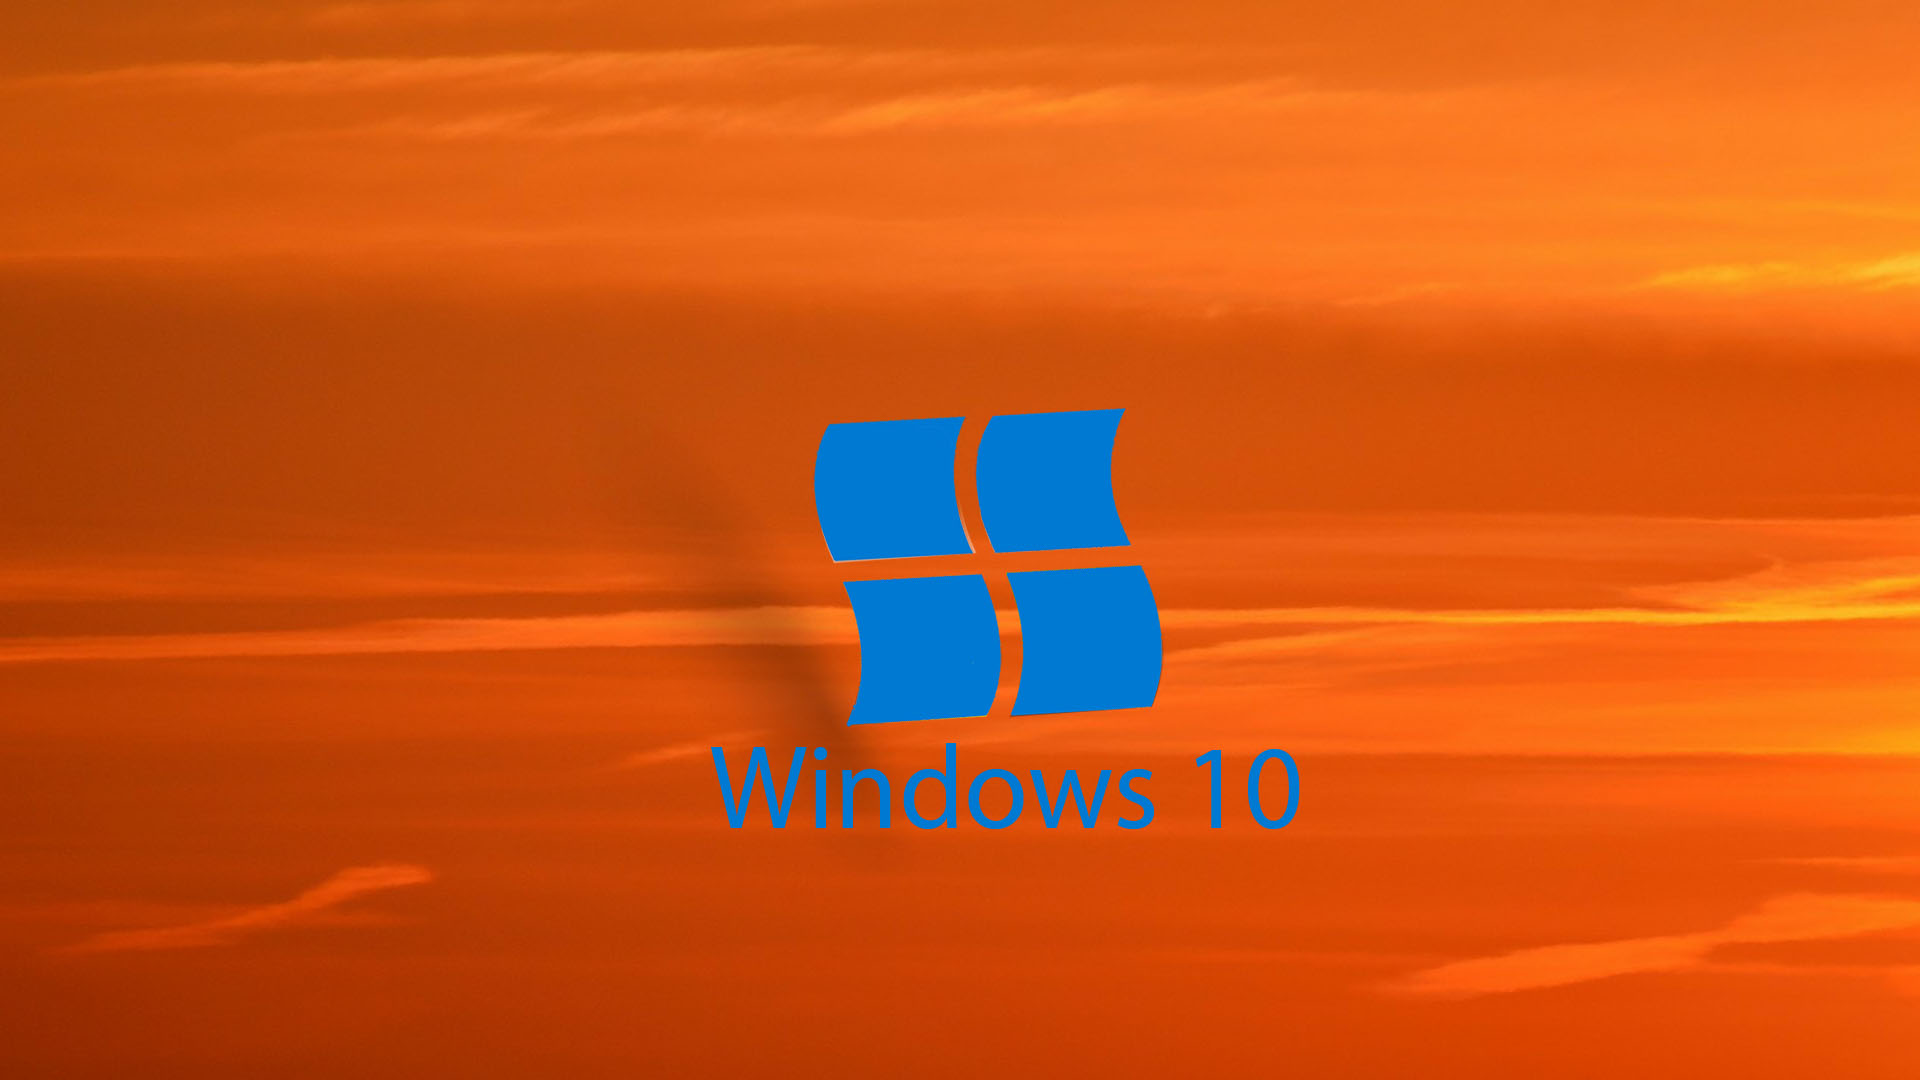 desktop wallpaper hd for windows 10,orange,blue,yellow,flag,amber